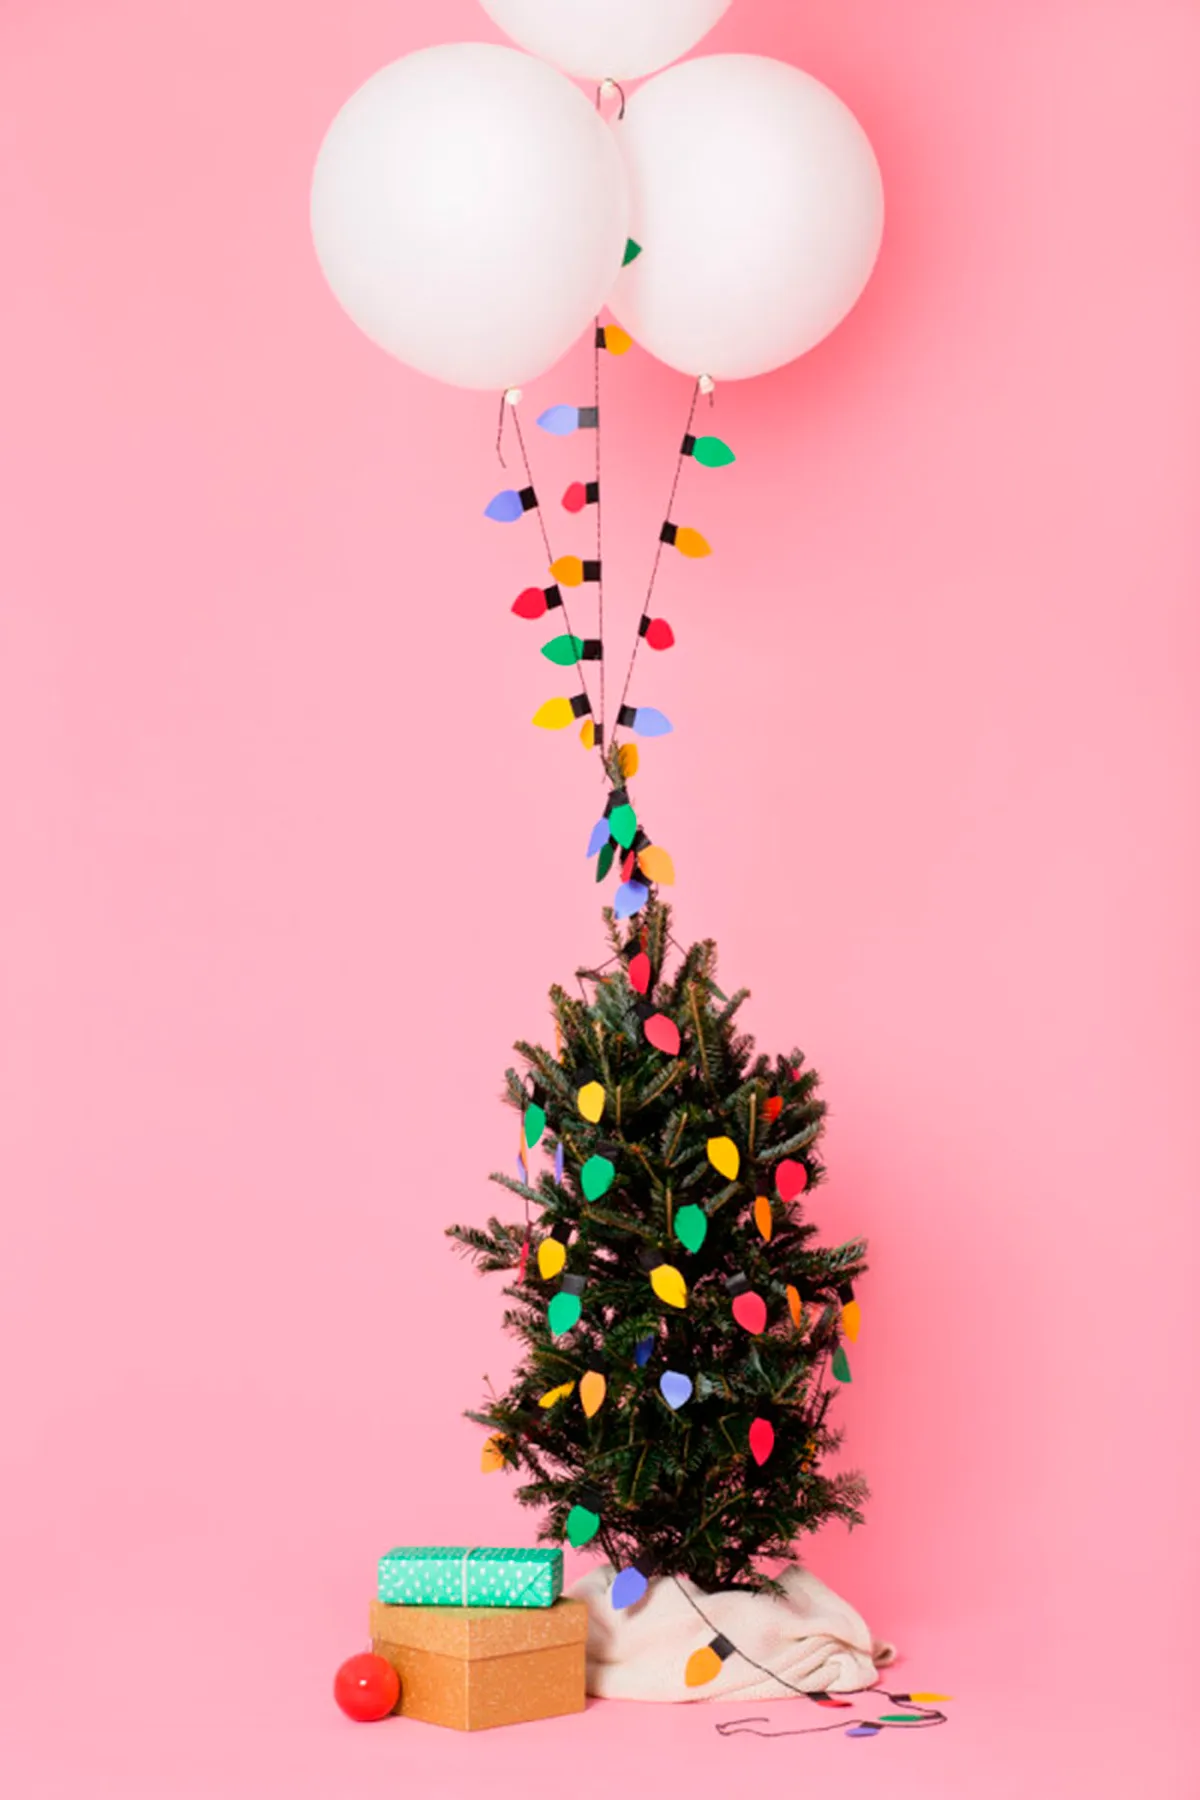 DIY Christmas light balloon garland